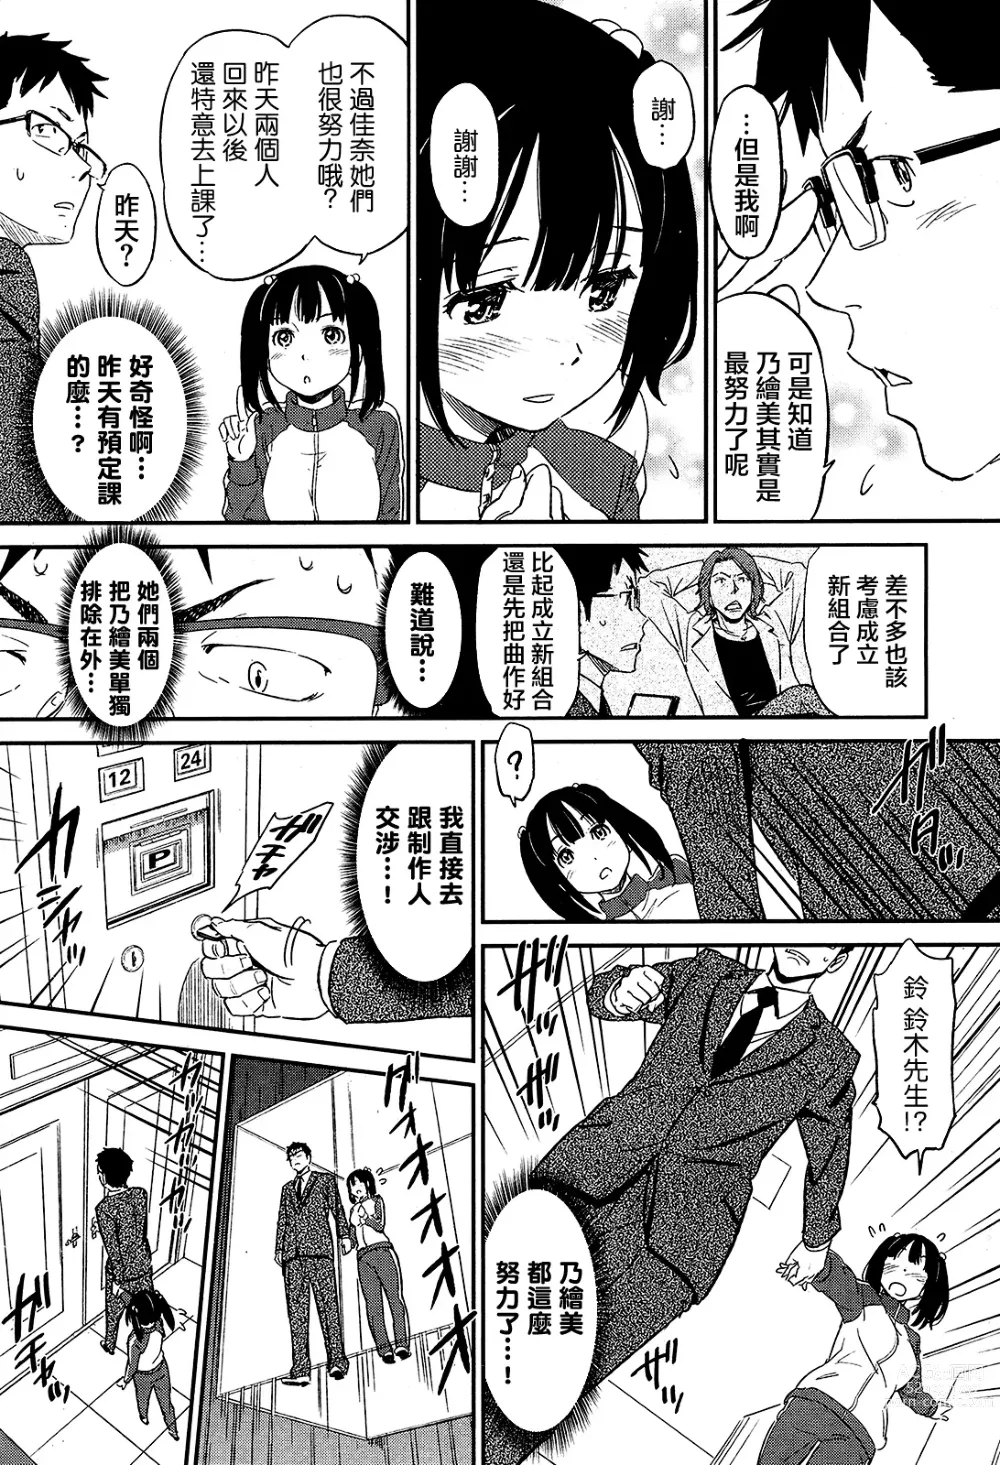 Page 6 of manga はめ ♥ どる